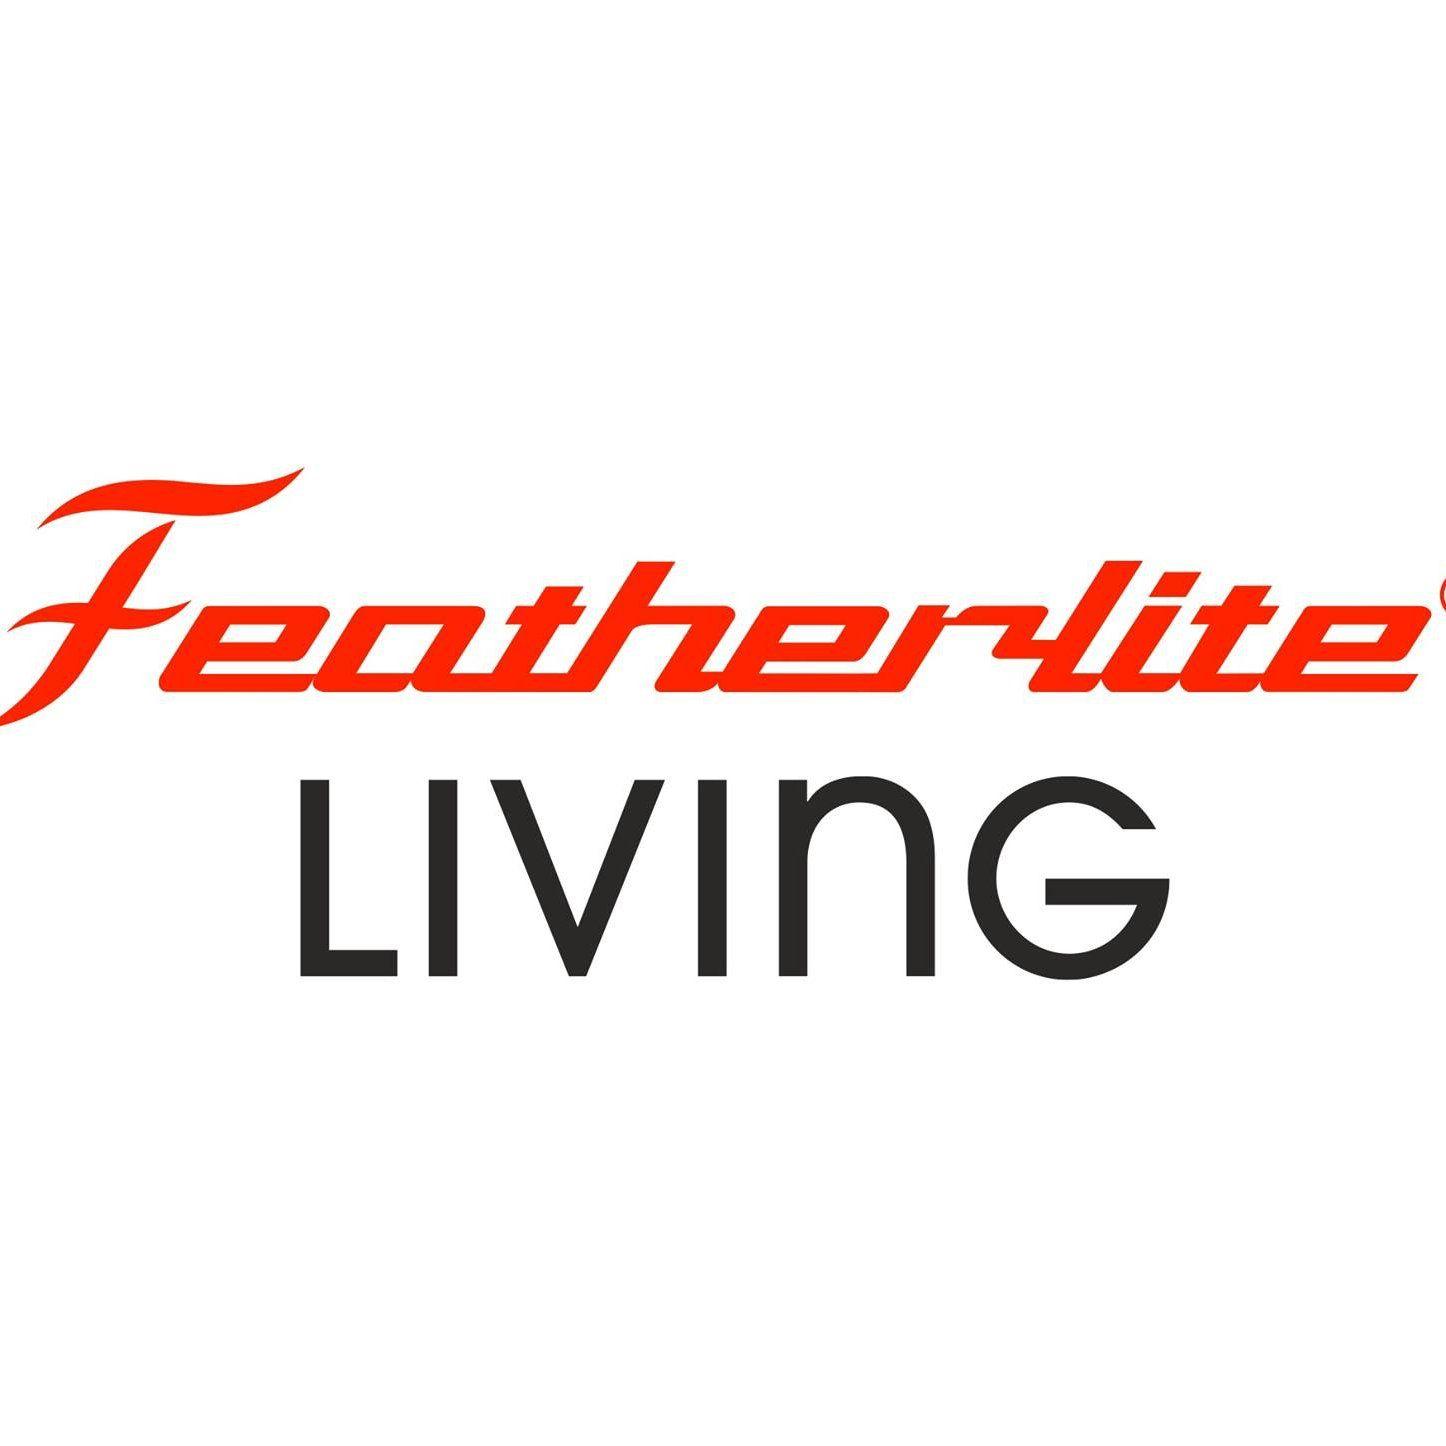 Featherlite Logo - Featherlite living (@FeatherliteL) | Twitter